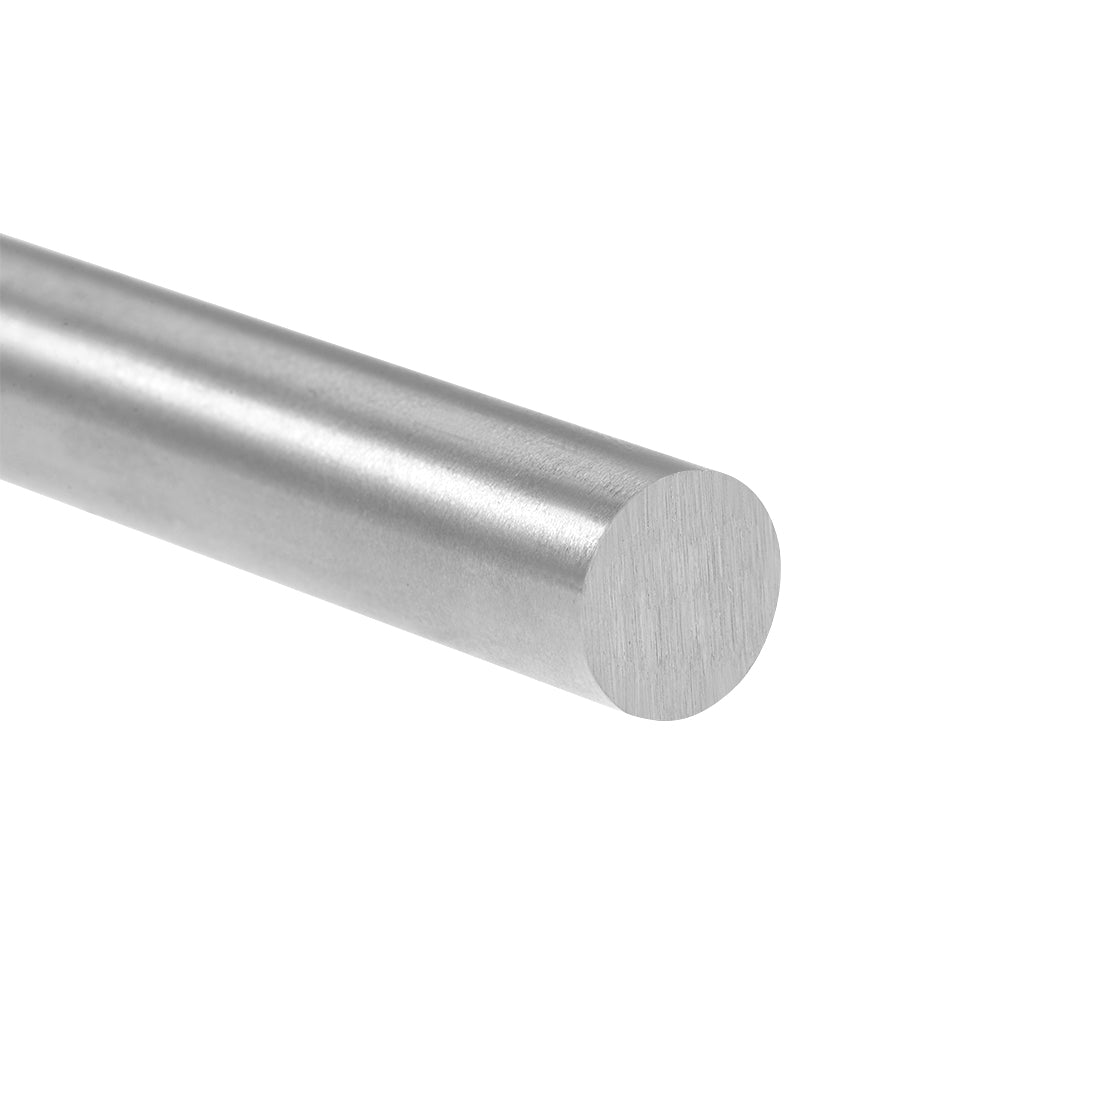 uxcell Uxcell Round Metal Rods 10mm x 100mm High Speed Steel (HSS) Lathe Bar Stock 2 Pcs